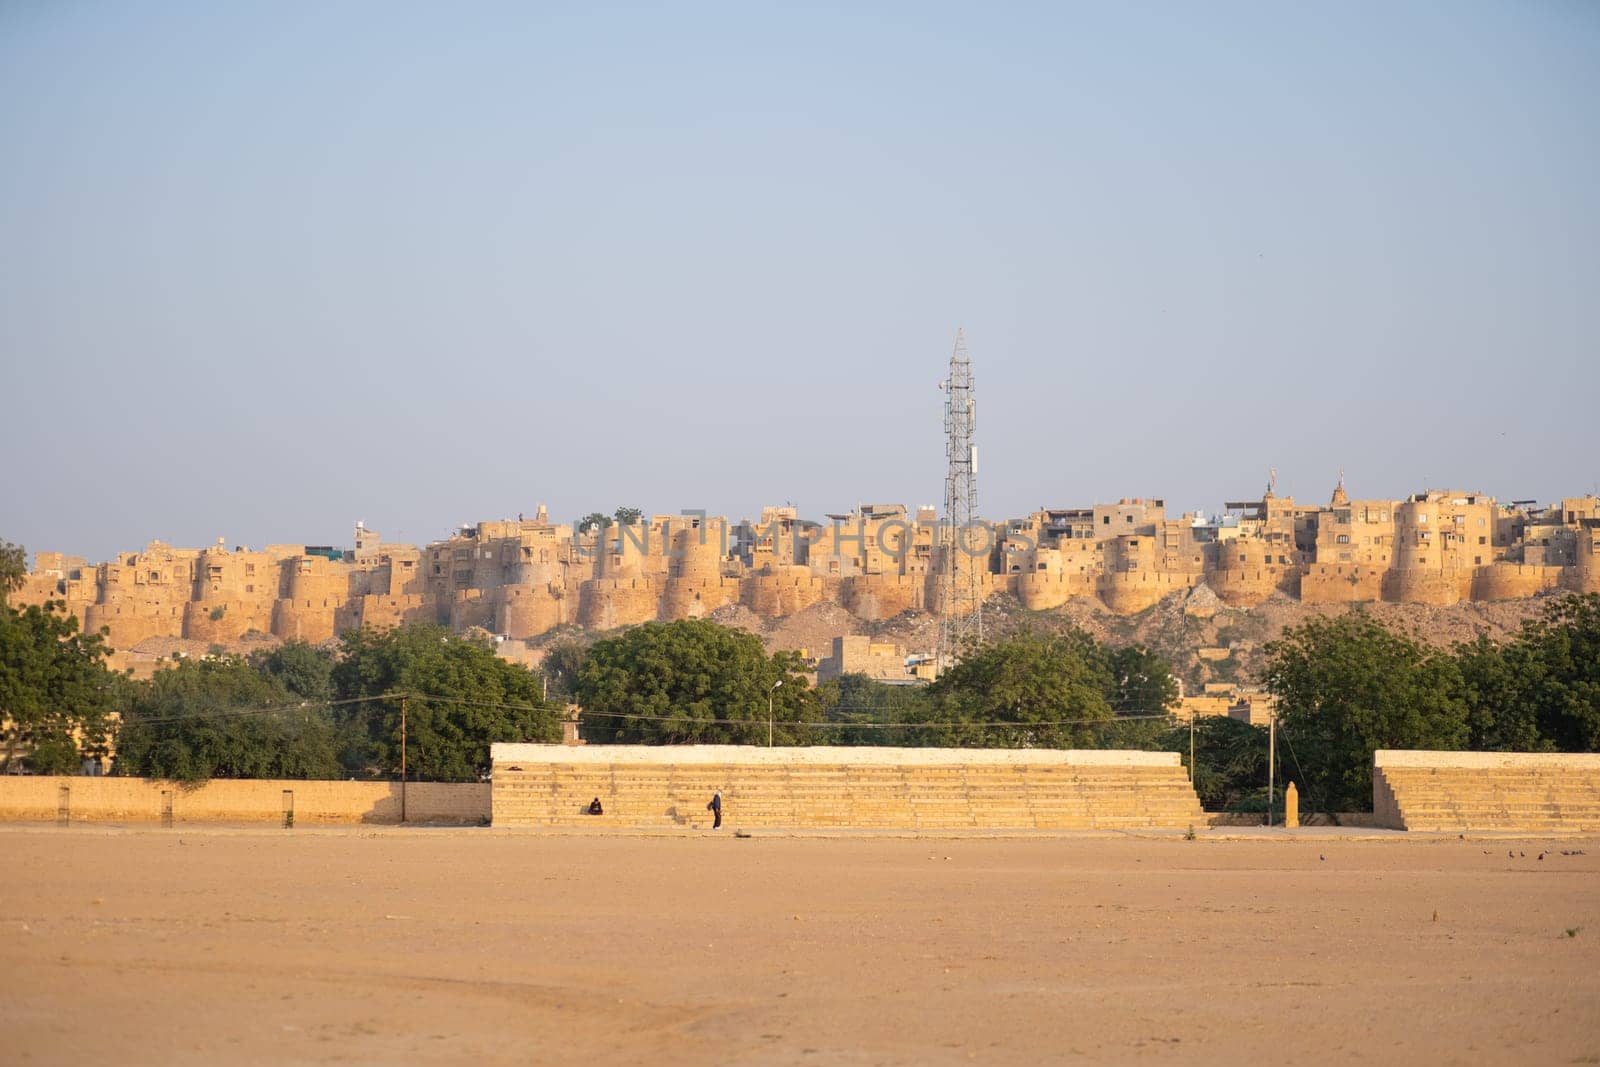 Jaisalmer, India - December 7, 2019: Historical Jaisalmer Fort as seen from the Shaheed Poonam Singh Stadium